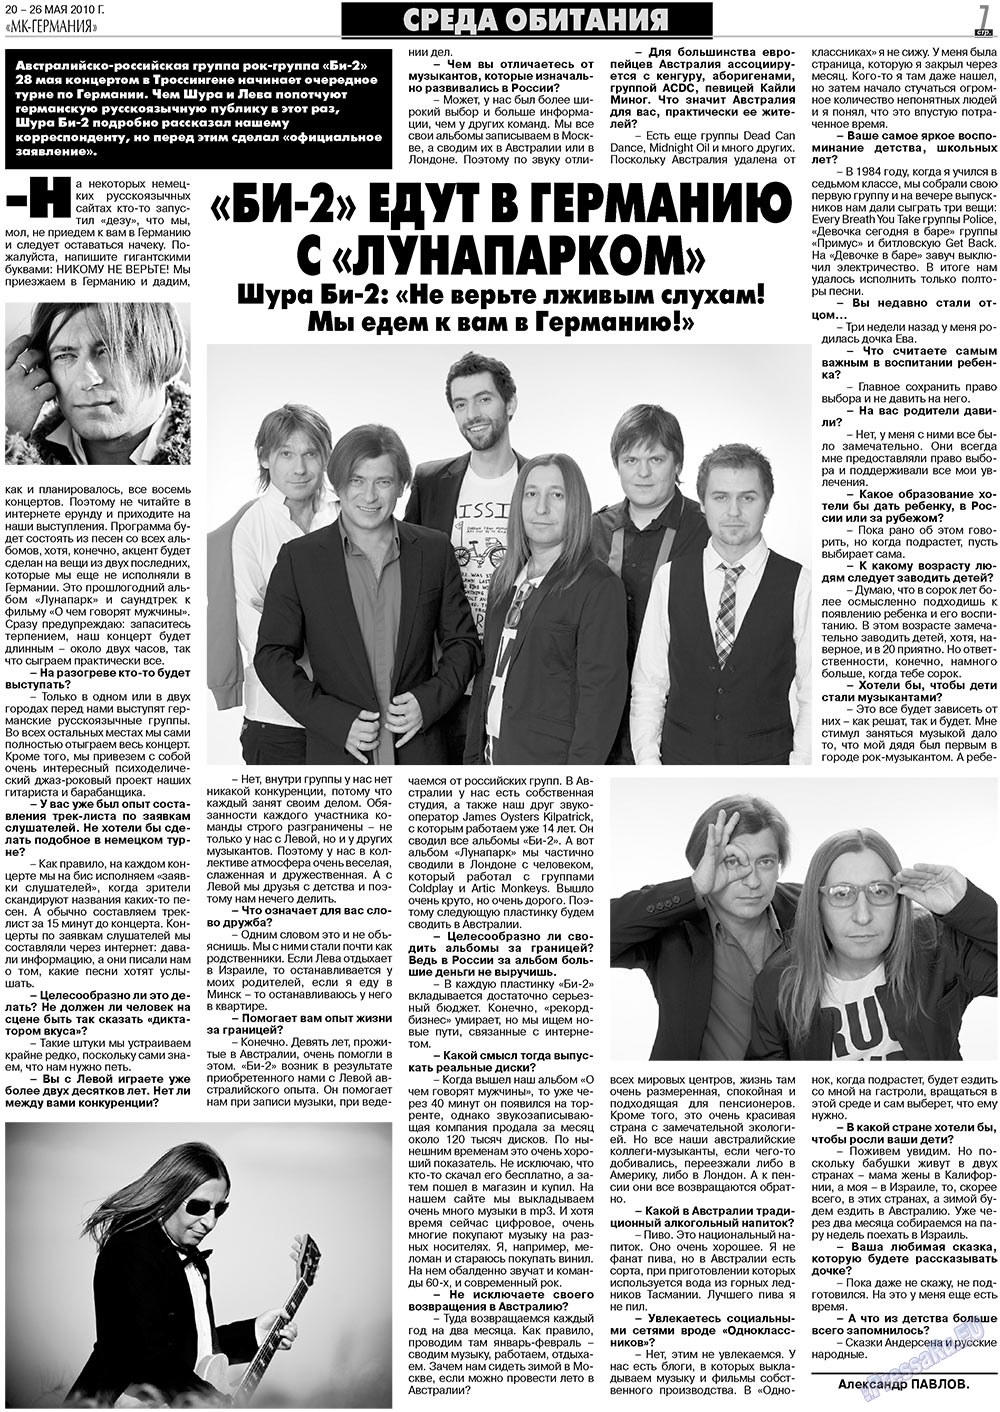 МК-Германия, газета. 2010 №21 стр.7